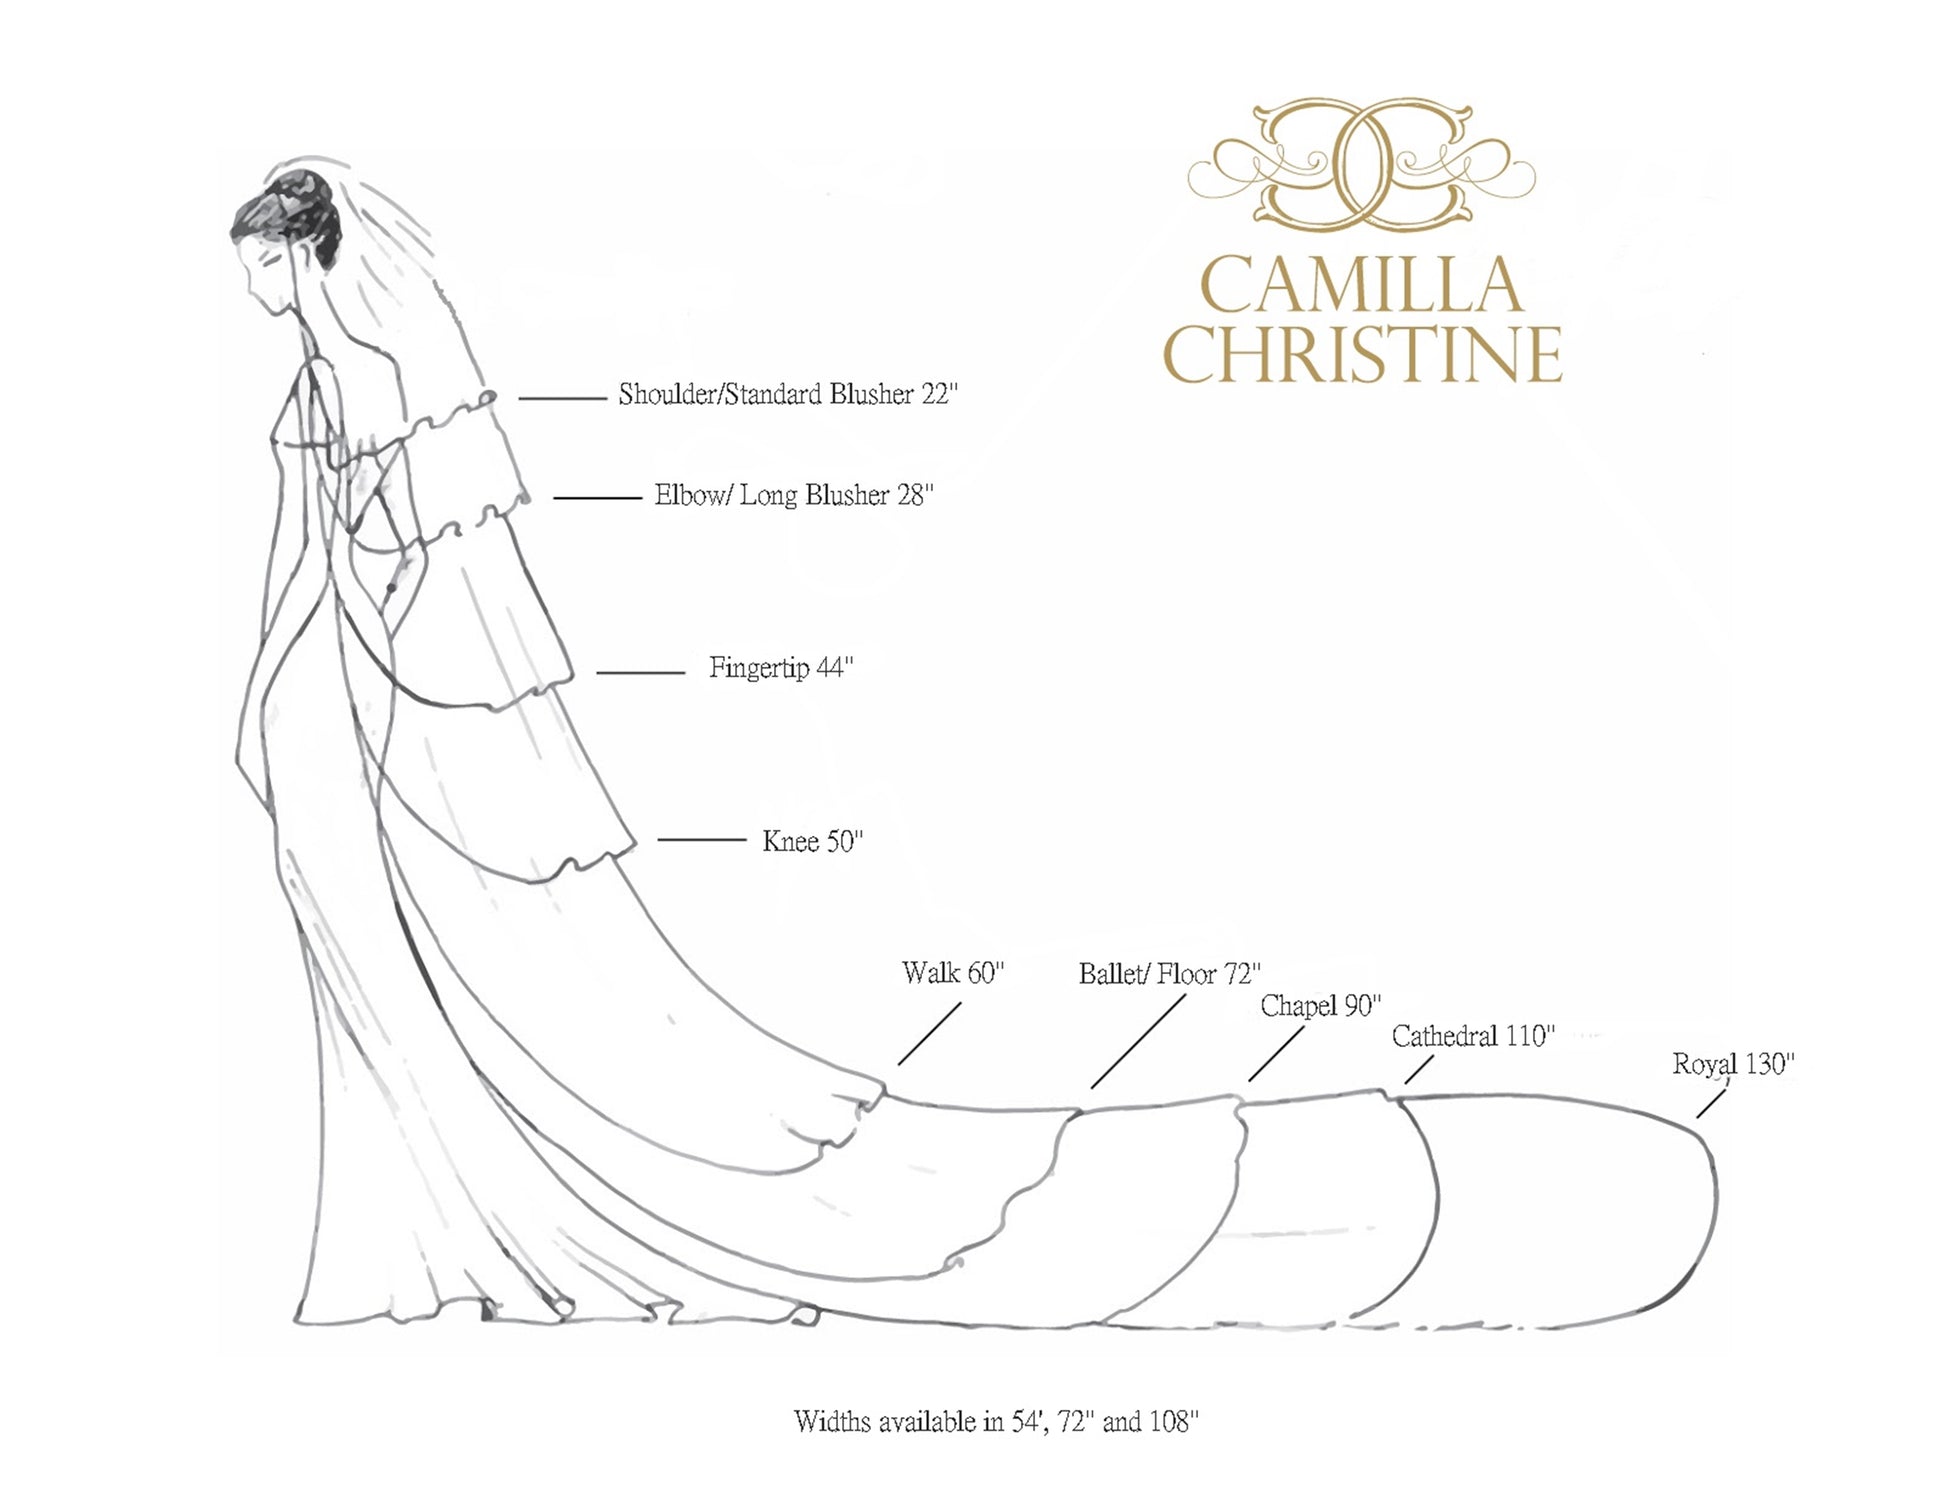 Camilla Christine Wedding Veil Length Guide, Shoulder veil, Elbow Veil, Fingertip Veil, Knee Veil, Walk Veil, Ballet Veil, Chapel Veil, Cathedral Veil, Royal Veil